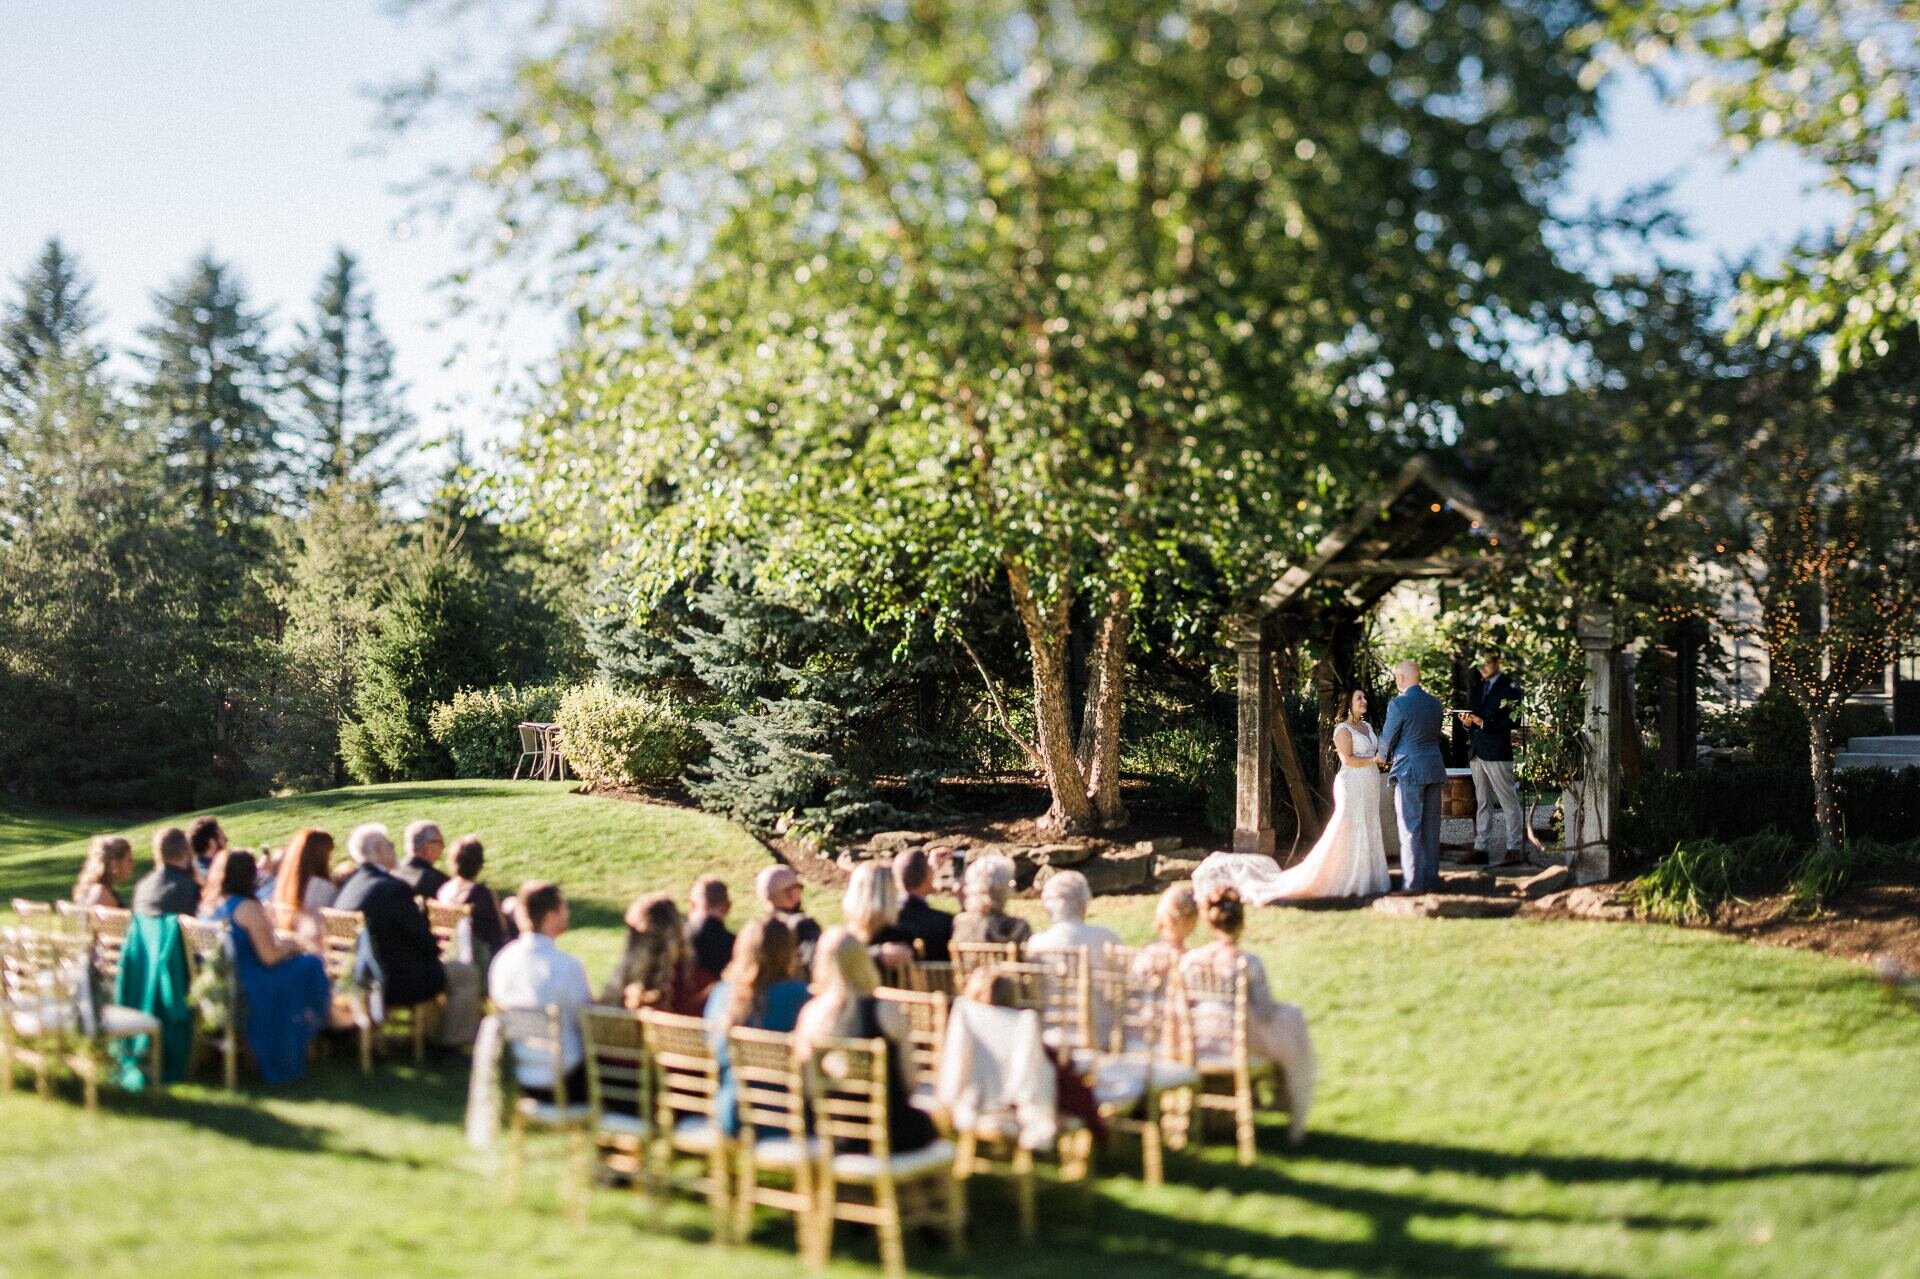 ThornCreek Winery and Garden Wedding Photos 1 50.jpg